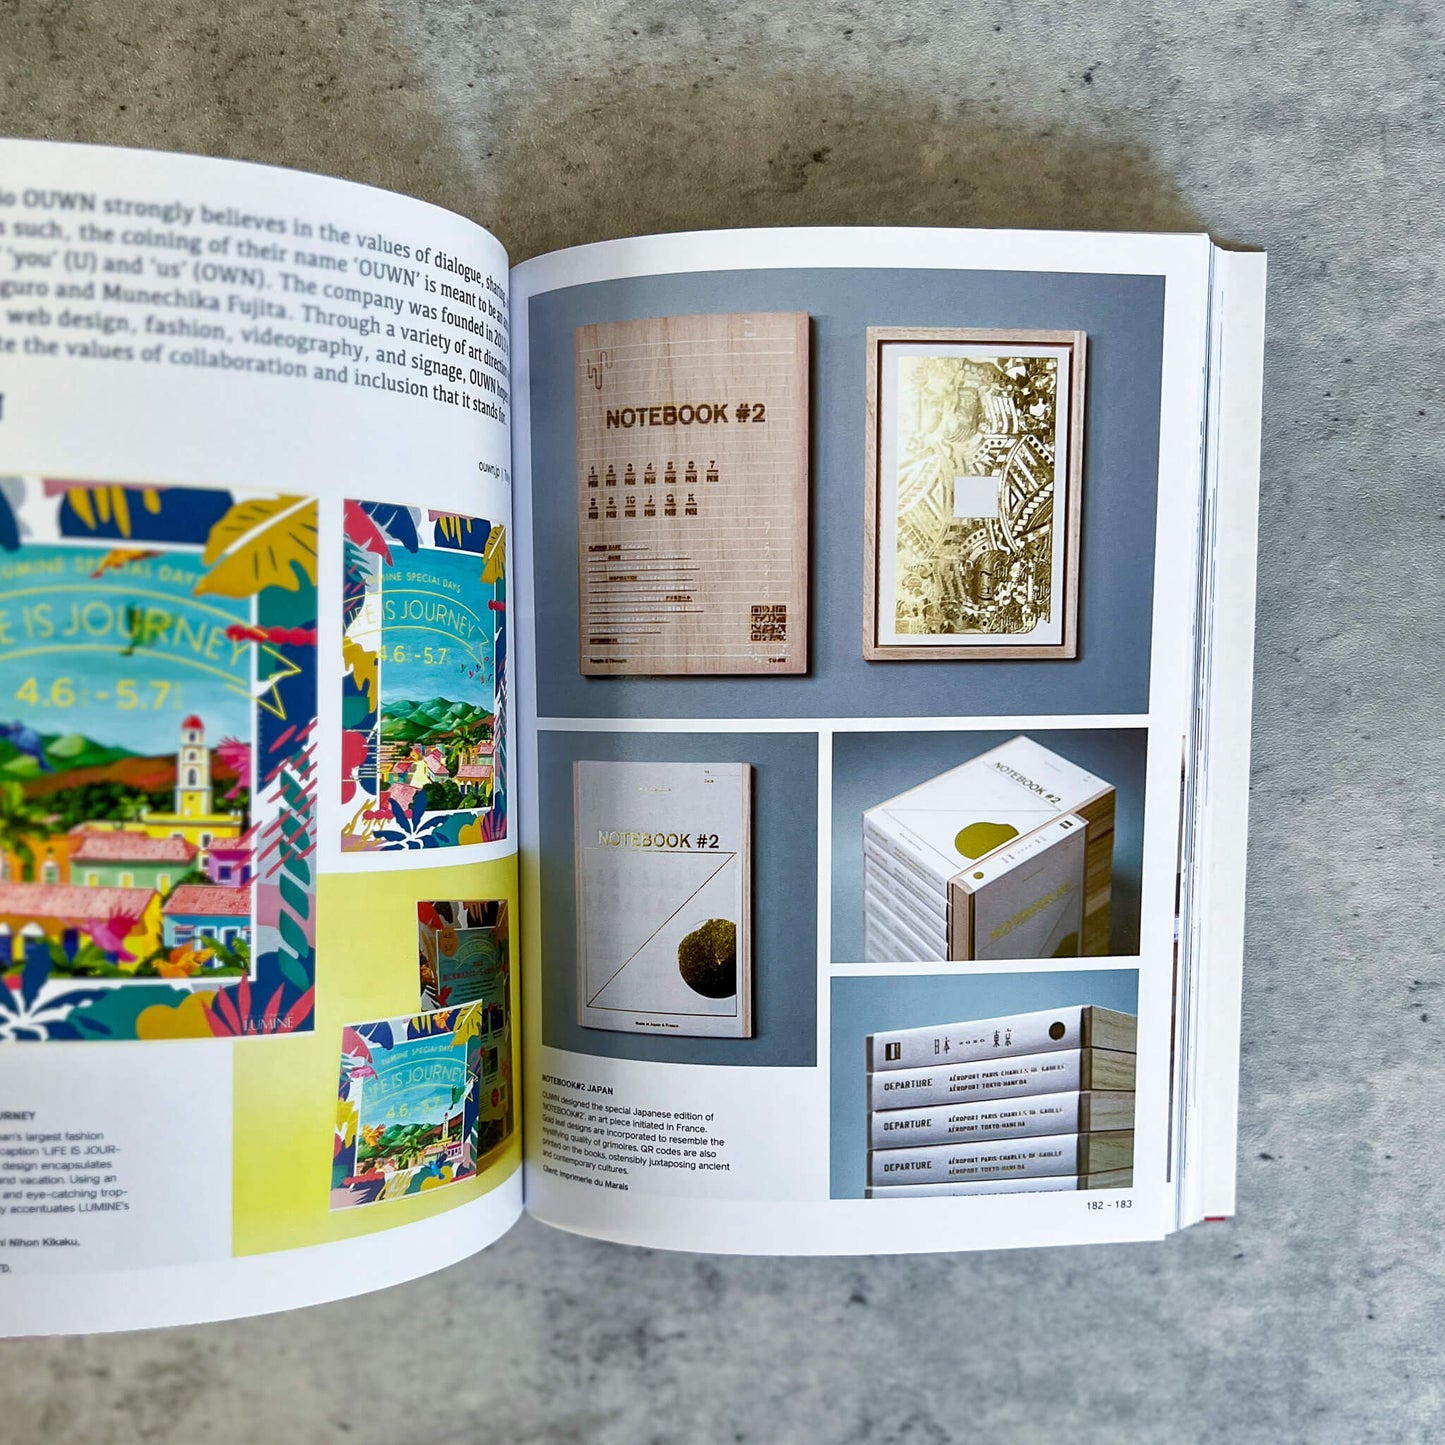 Book "Made in Japan: Awe-Inspiring Japanese Graphics"BookNagamochi Shop